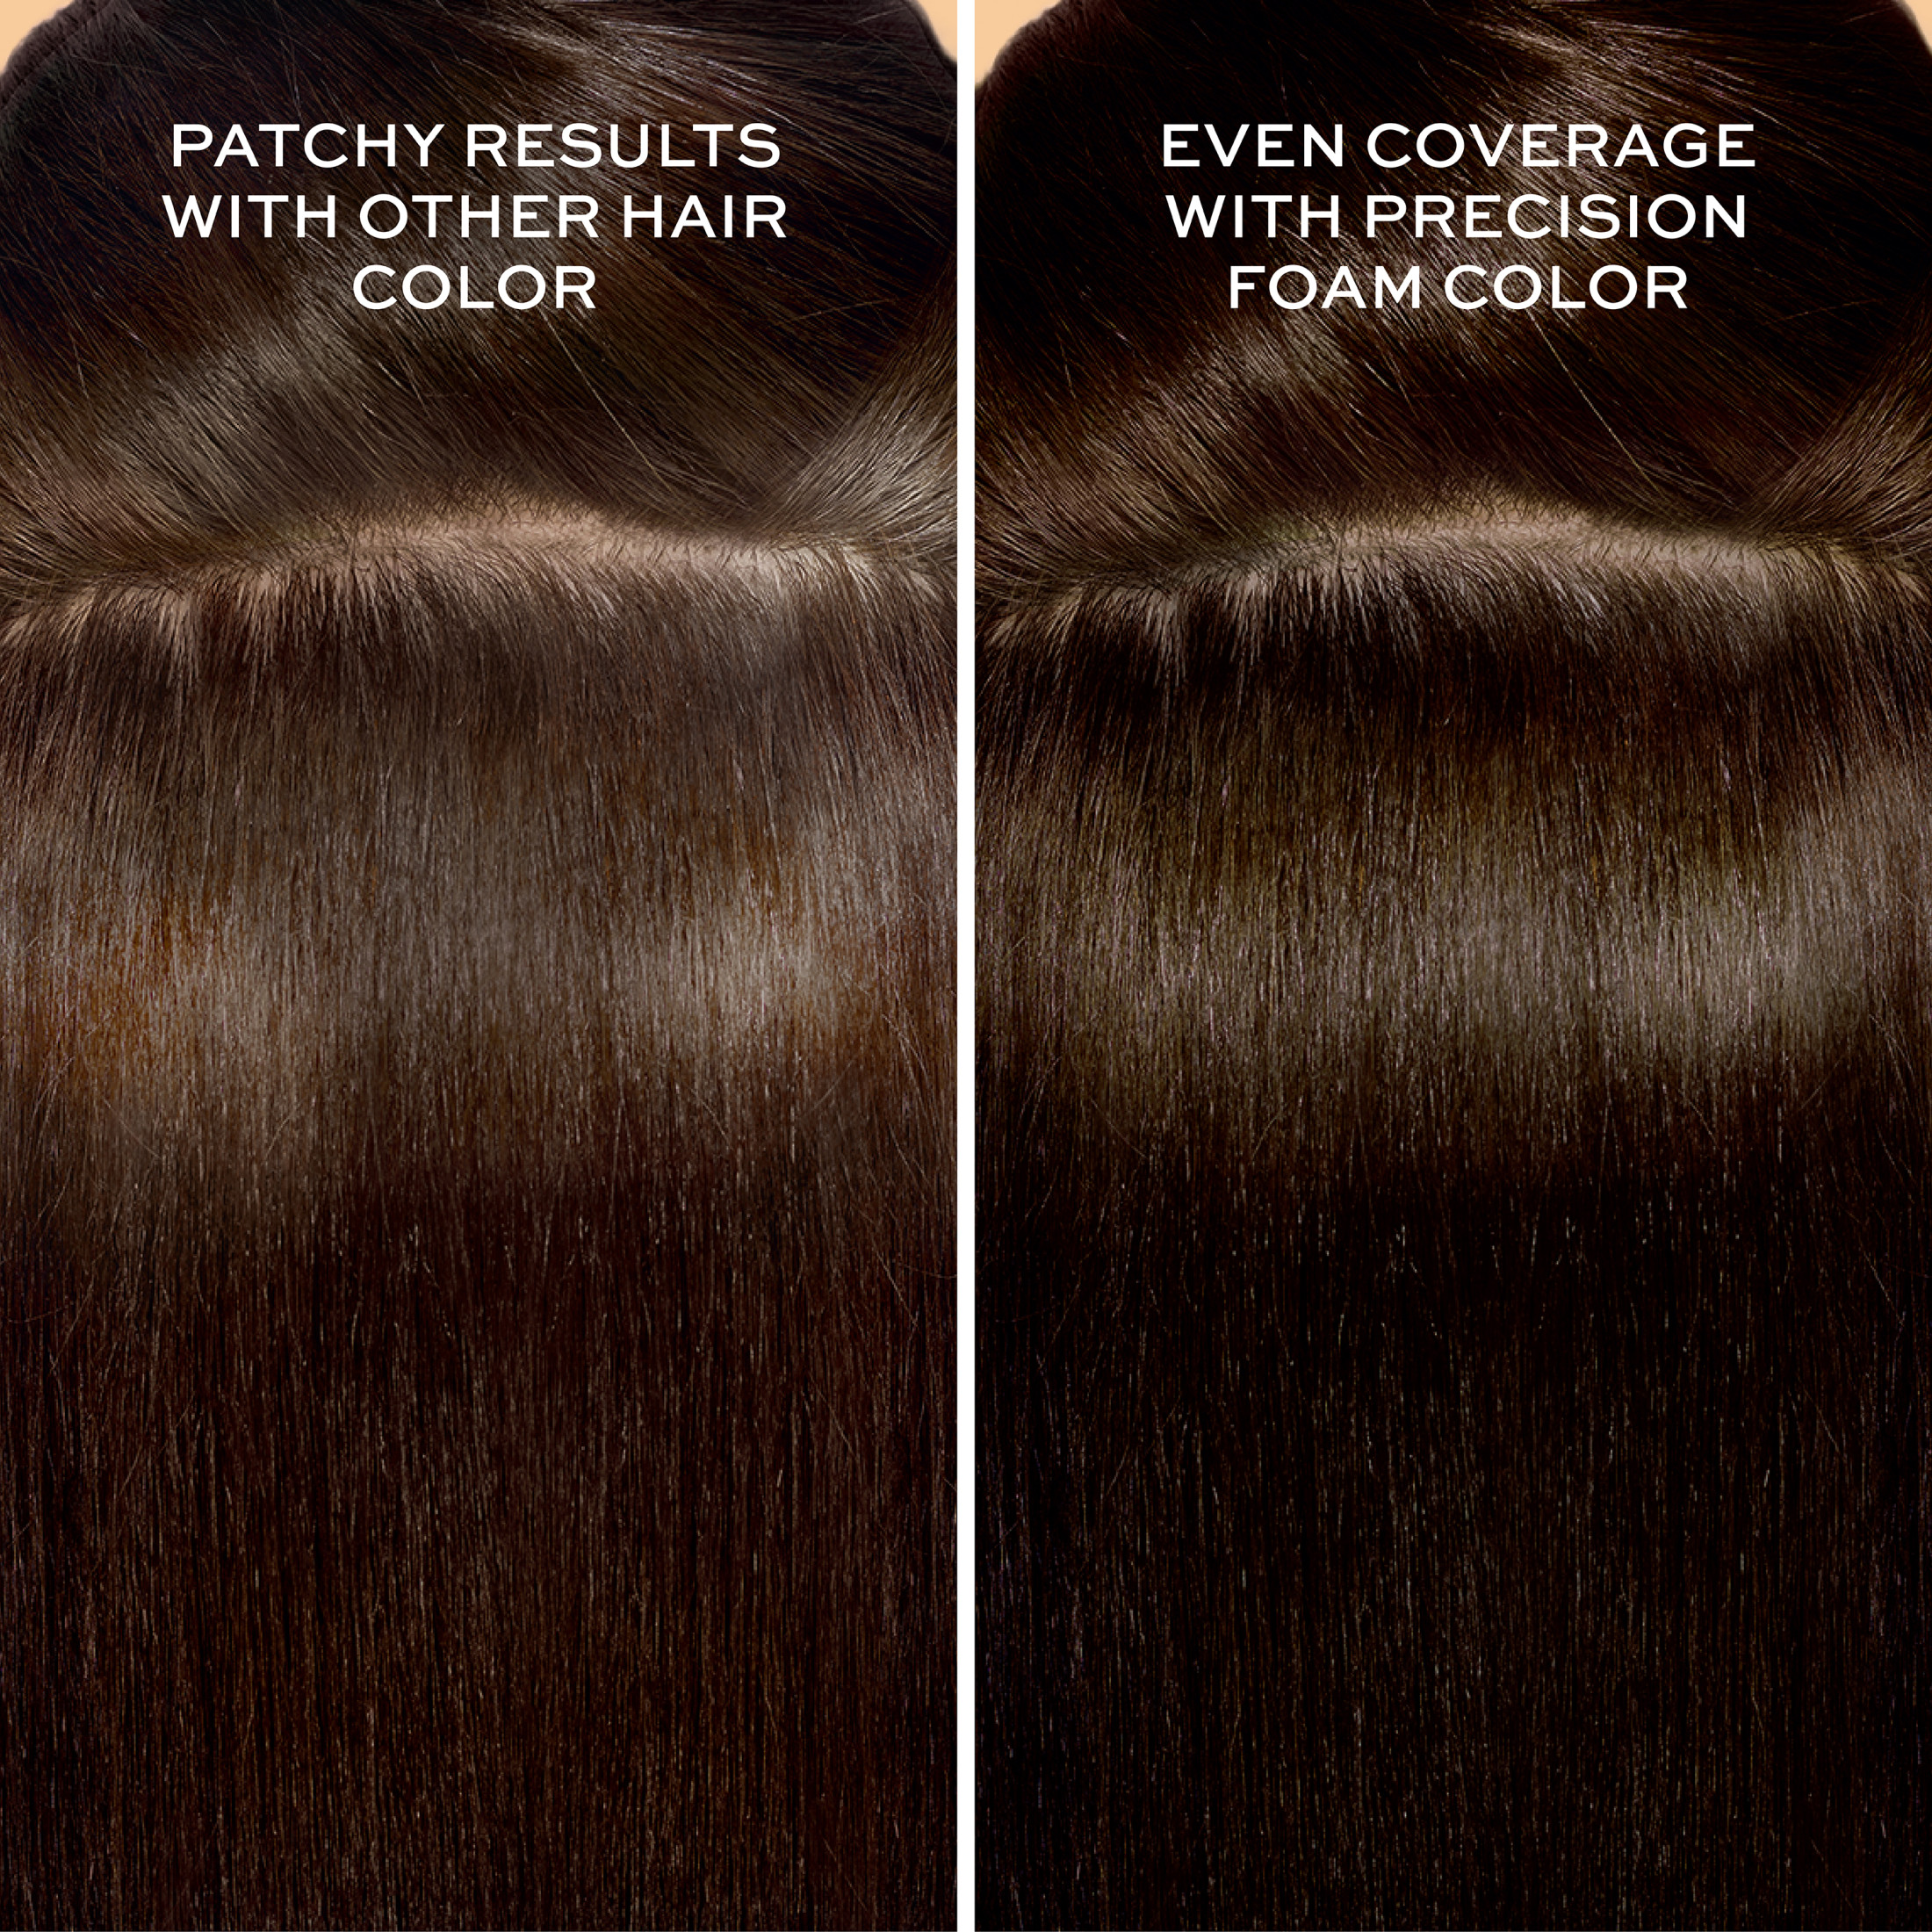 John Frieda Precision Foam Hair Color Kit, Brown Hair Dye, 5NBG Medium Chestnut Brown Hair Color, 1 Application - image 3 of 10